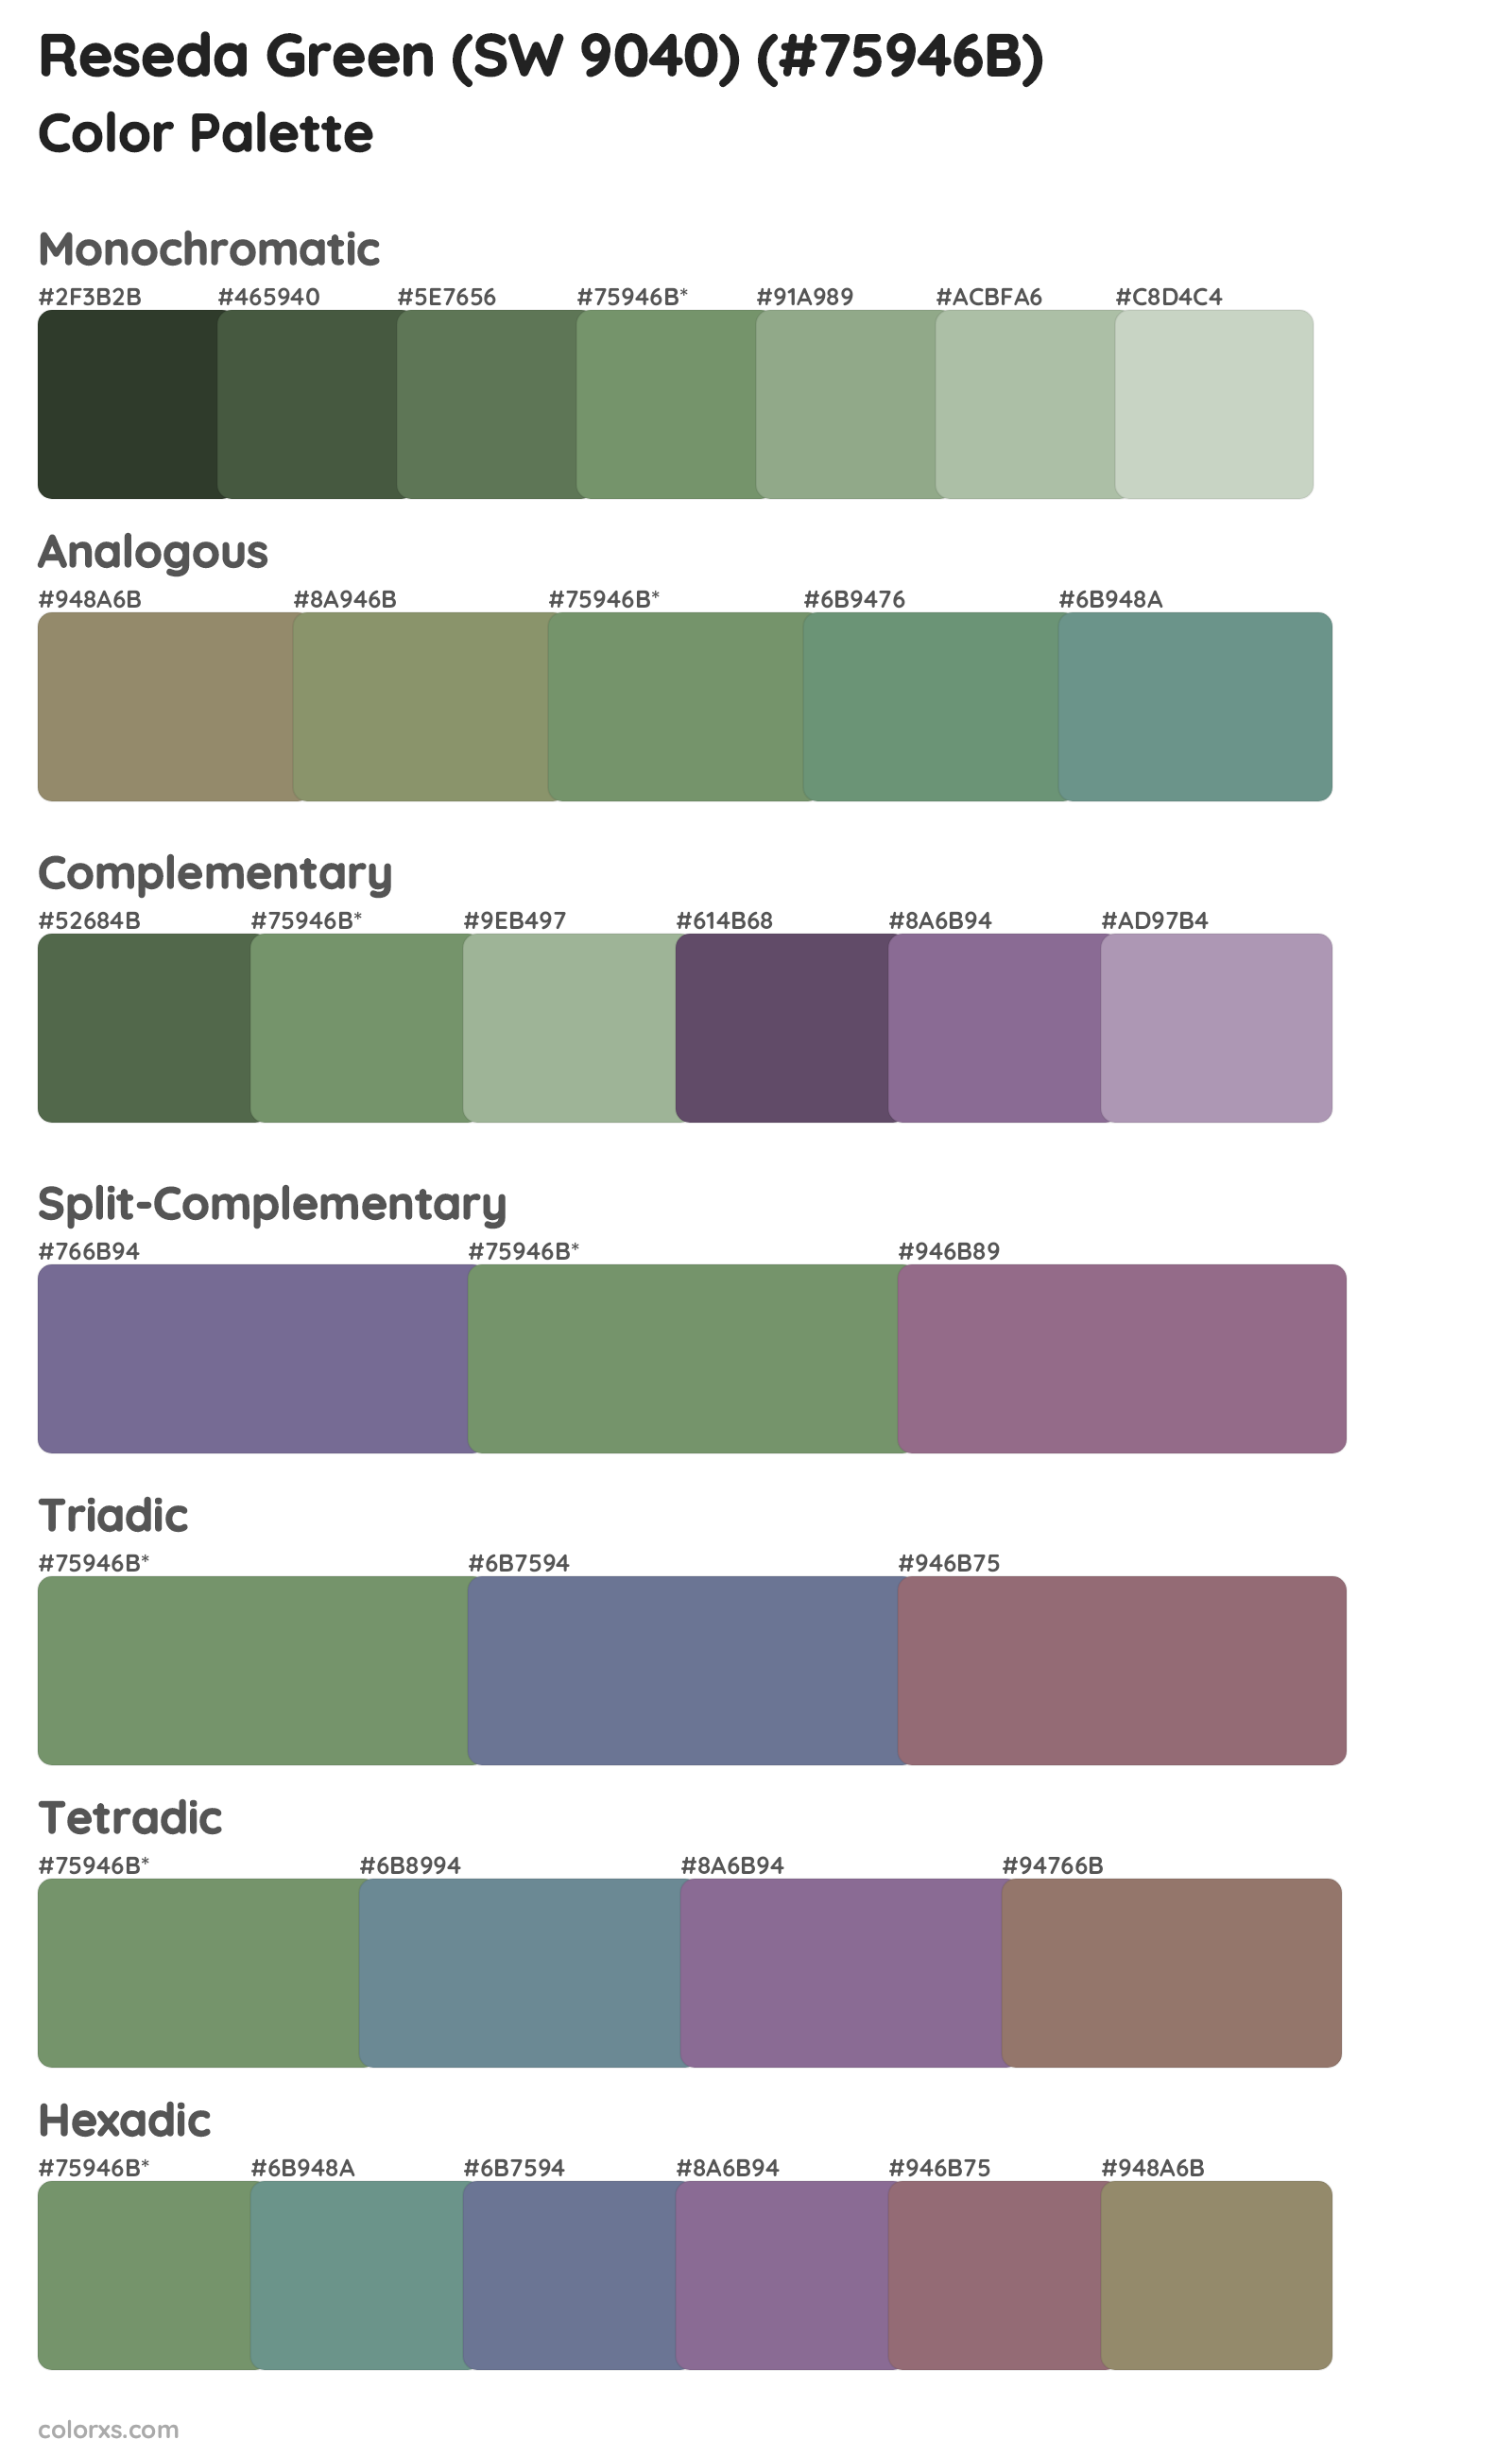 Reseda Green (SW 9040) Color Scheme Palettes